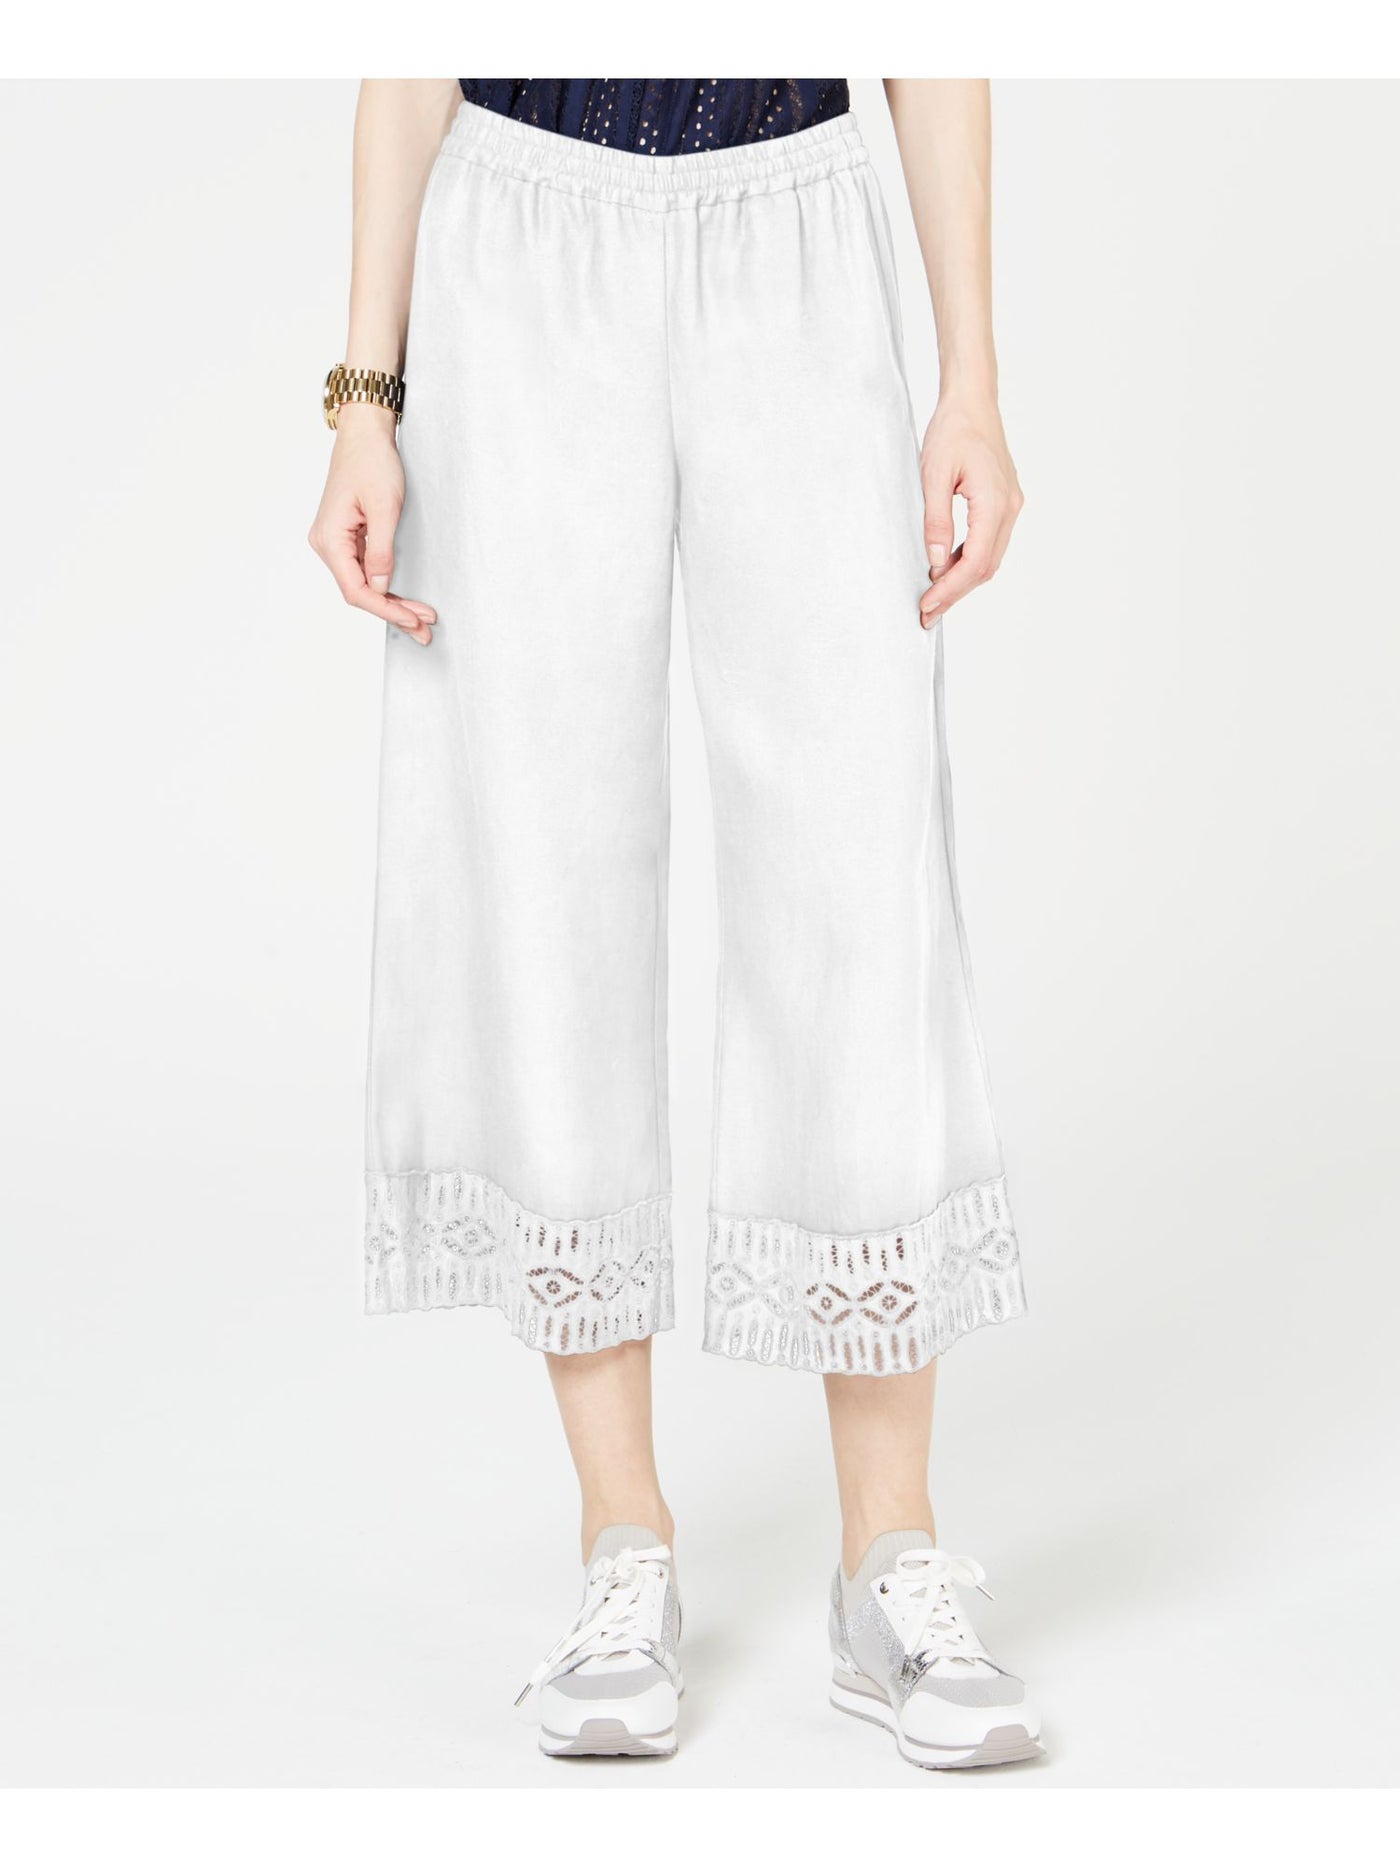 MICHAEL KORS Womens White Lace Wide Leg Evening Pants Size: XXL